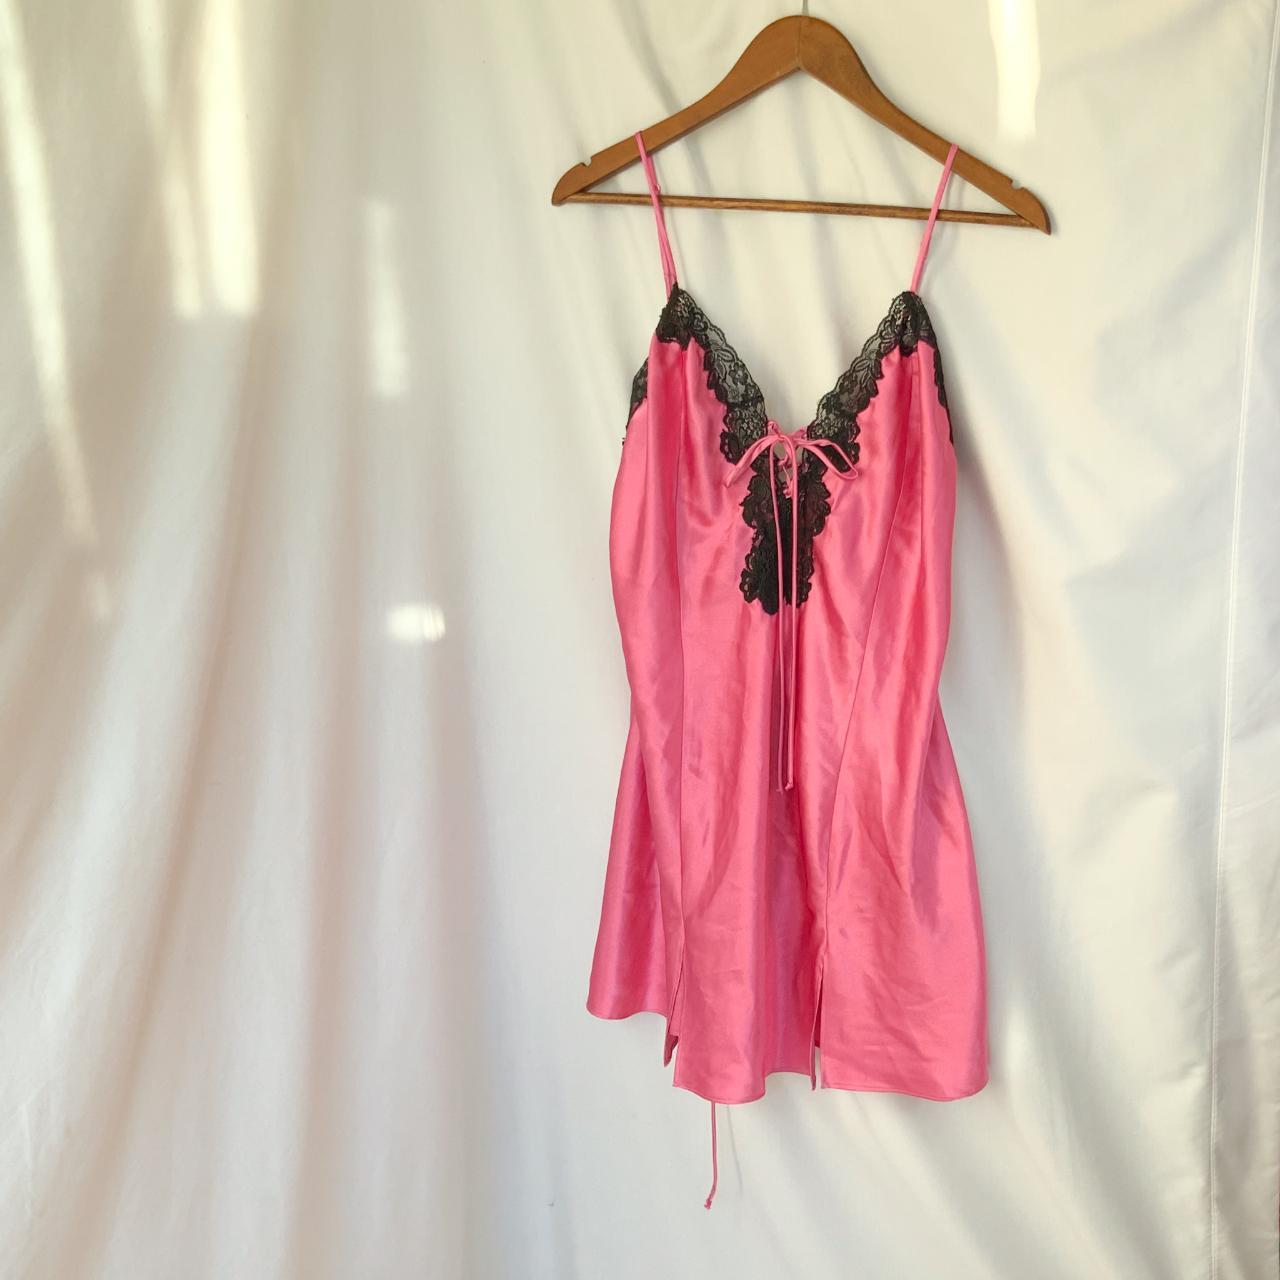 Women's Pink and Black Dress | Depop